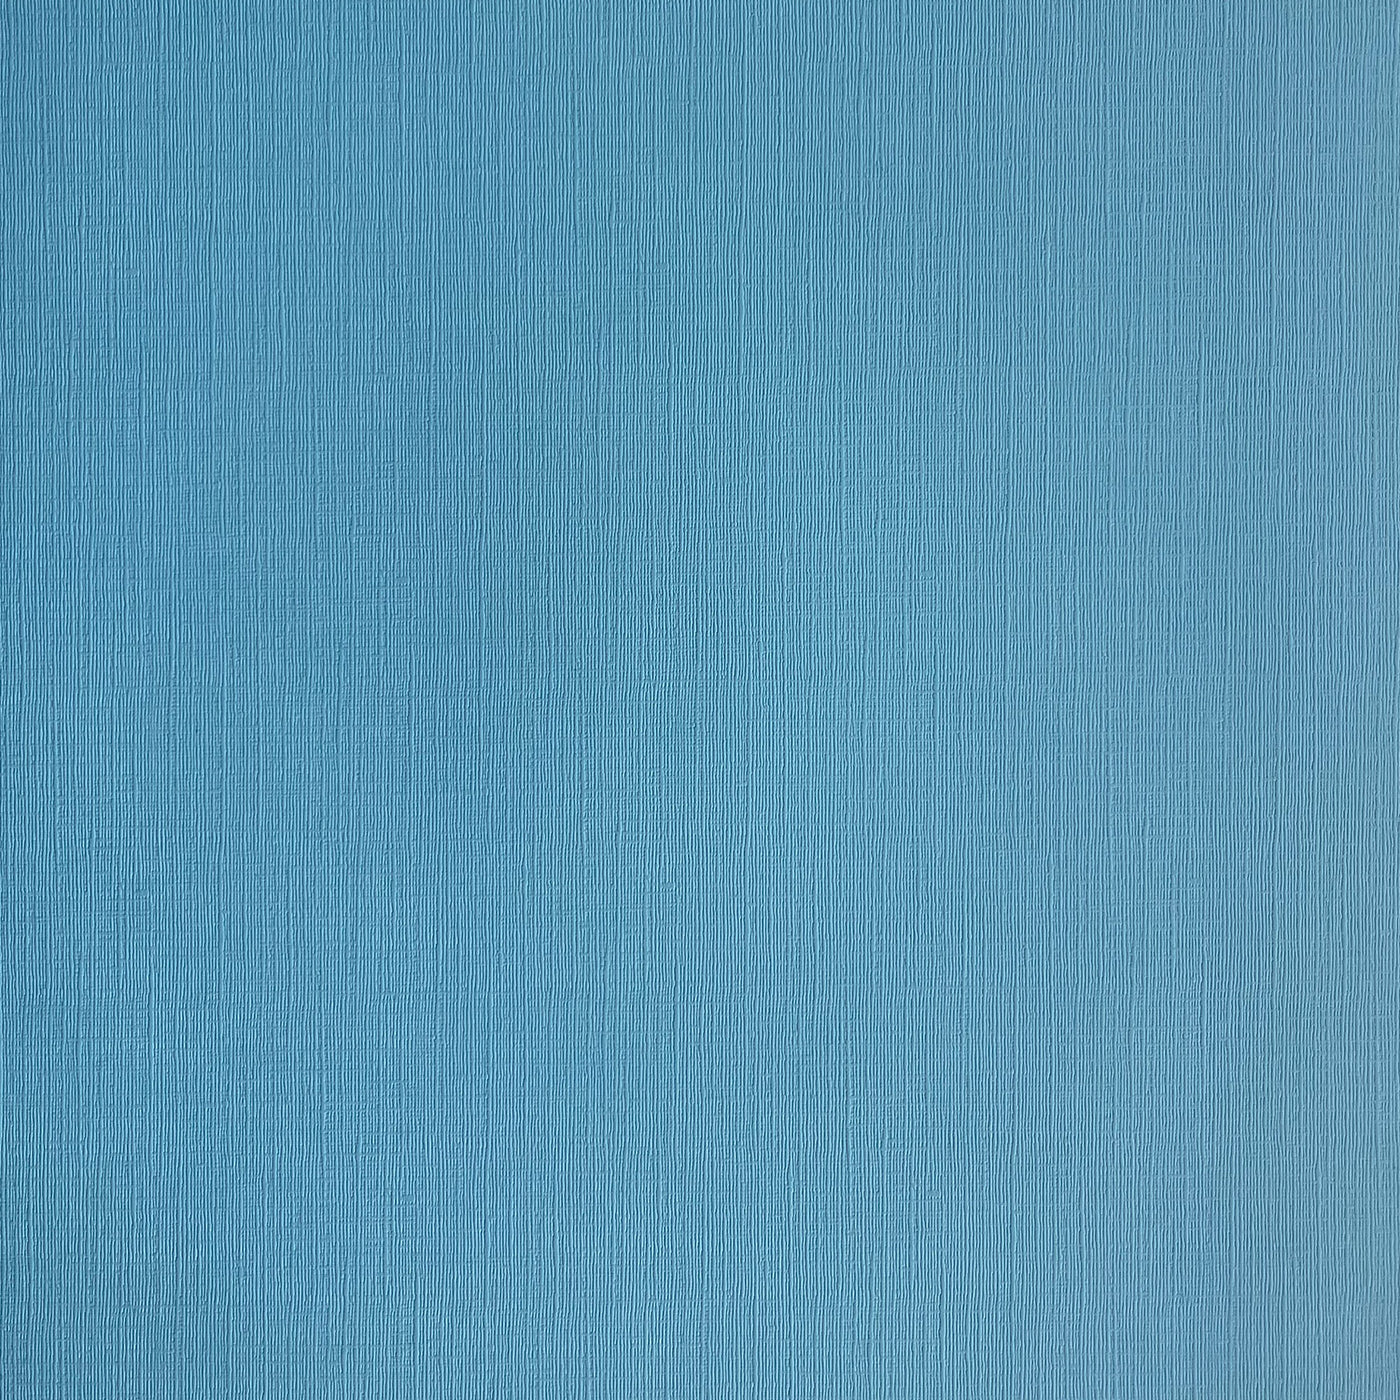 Madras Blue - Textured 12x12 Cardstock - Baby blue scrapbook paper